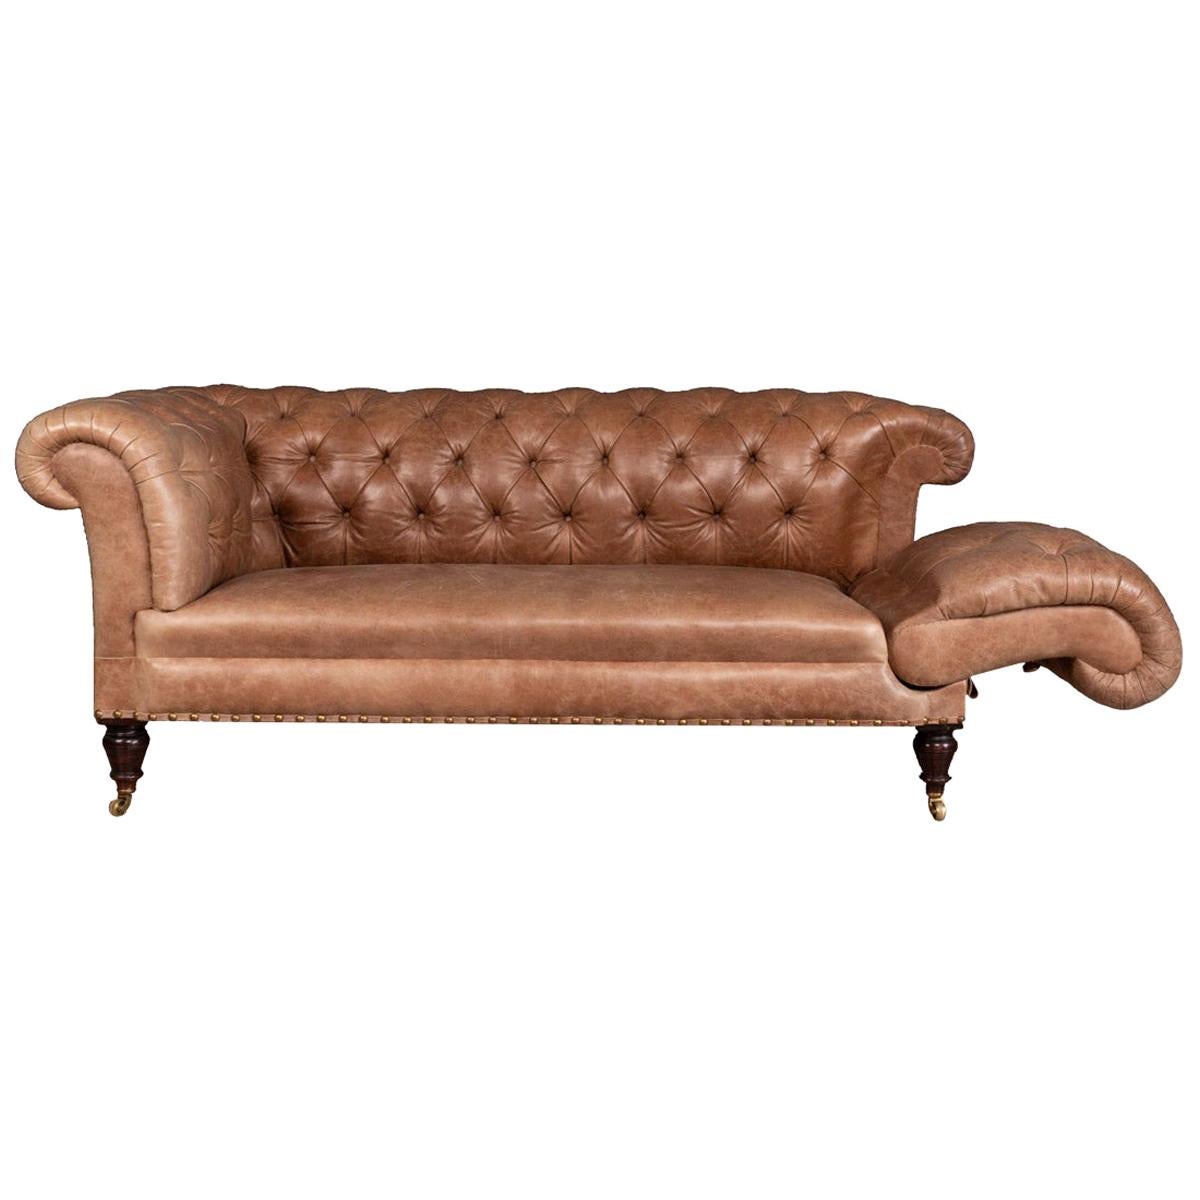 Antique 19th Century Victorian Drop Arm Leather Two-Seat Sofa, circa 1880